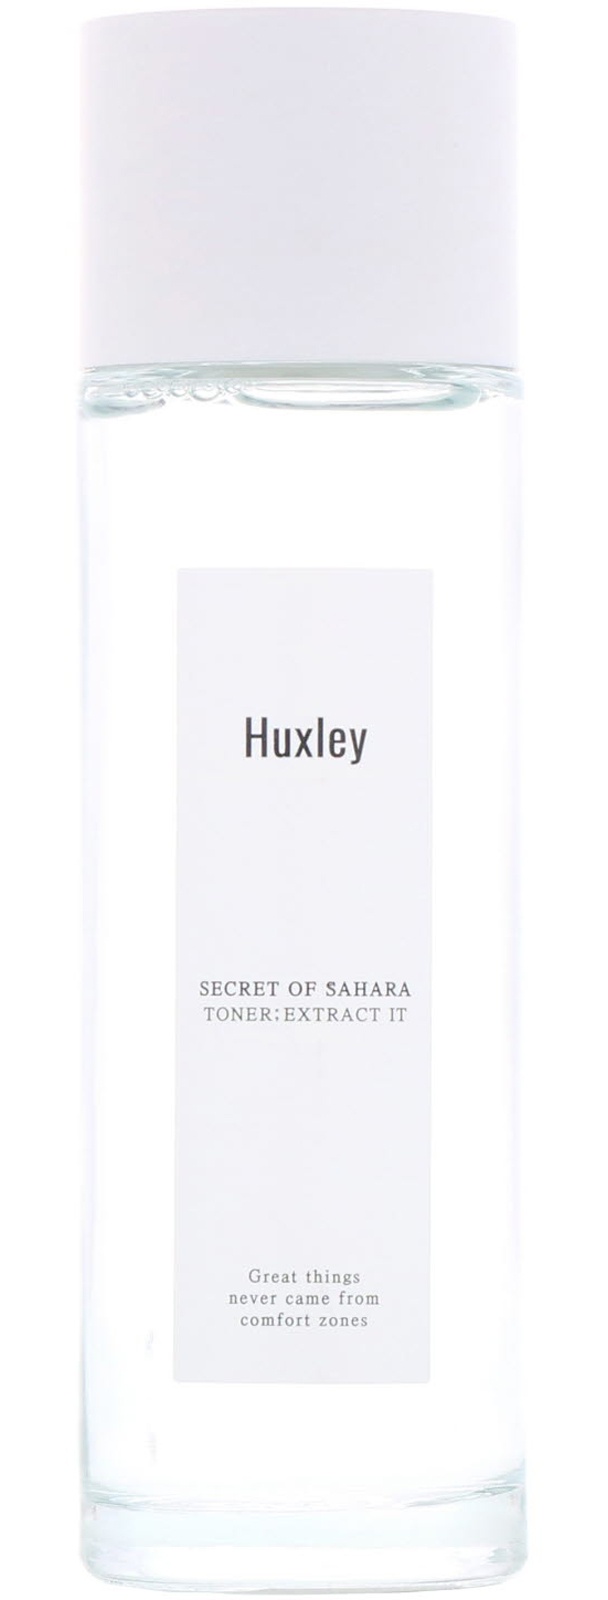 Huxley Secret Of Sahara Toner: Extract It